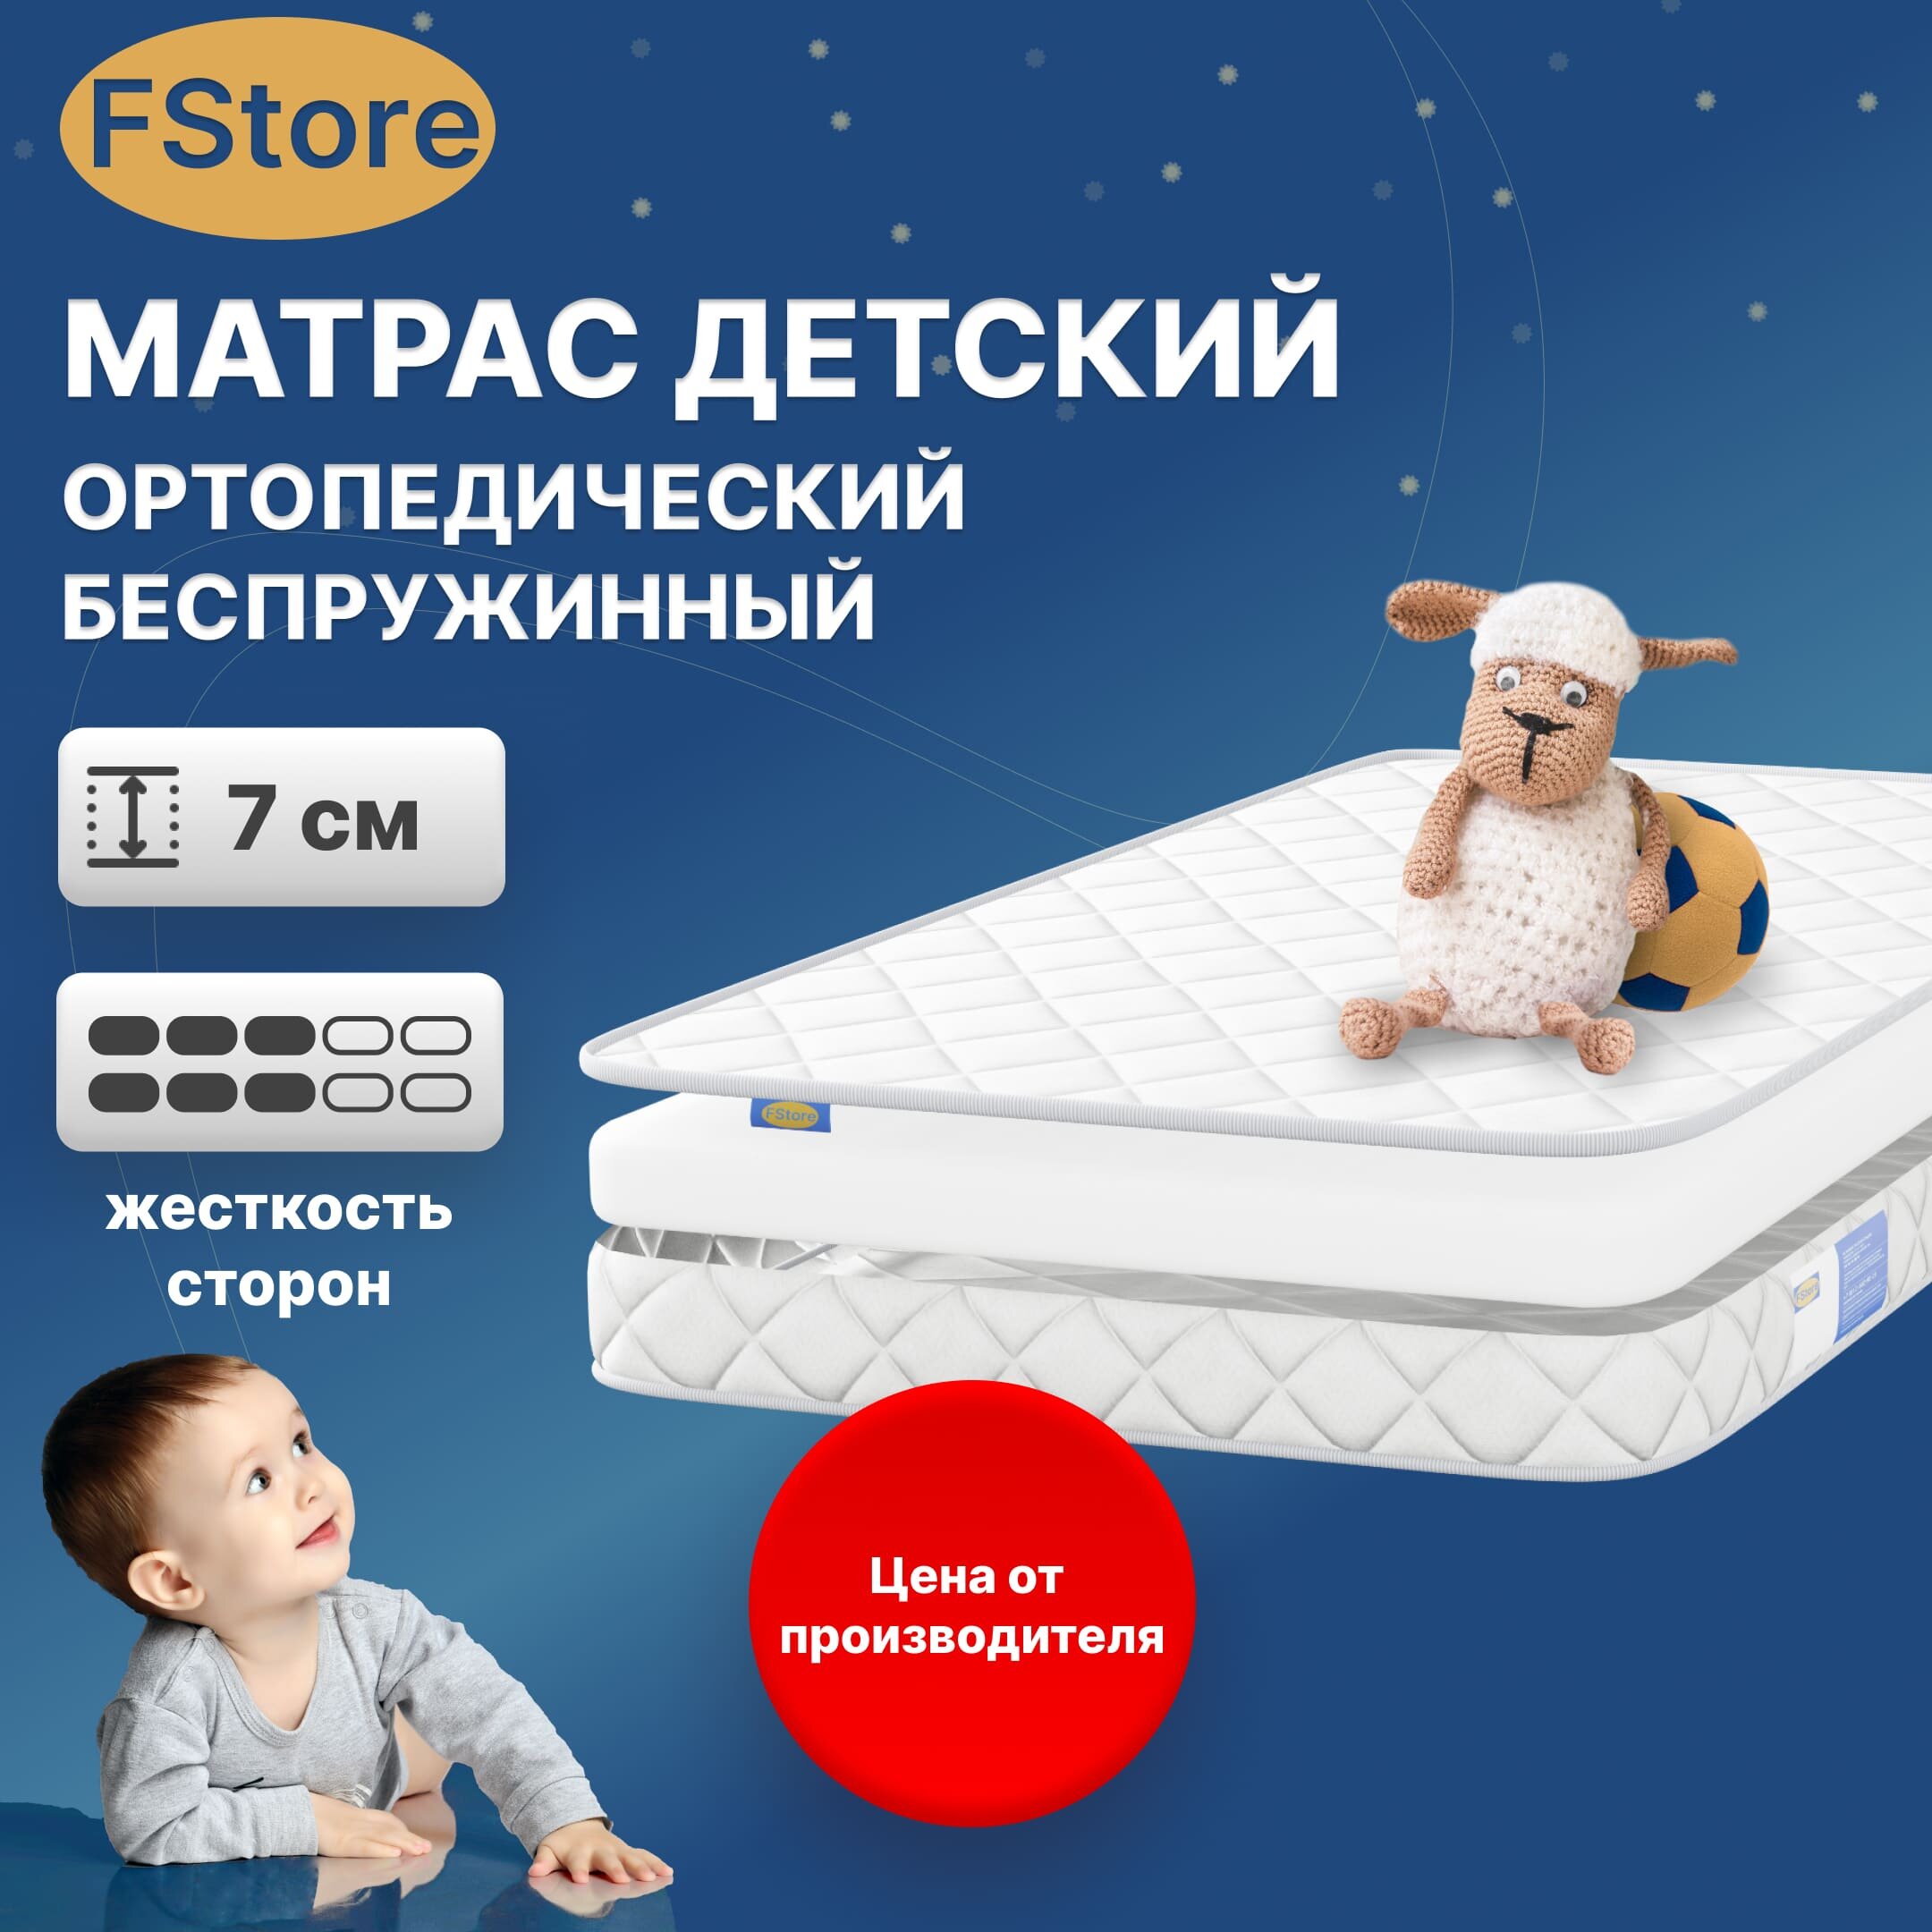 Матрас детский FStore Air Zone, Беспружинный, 80х180 см